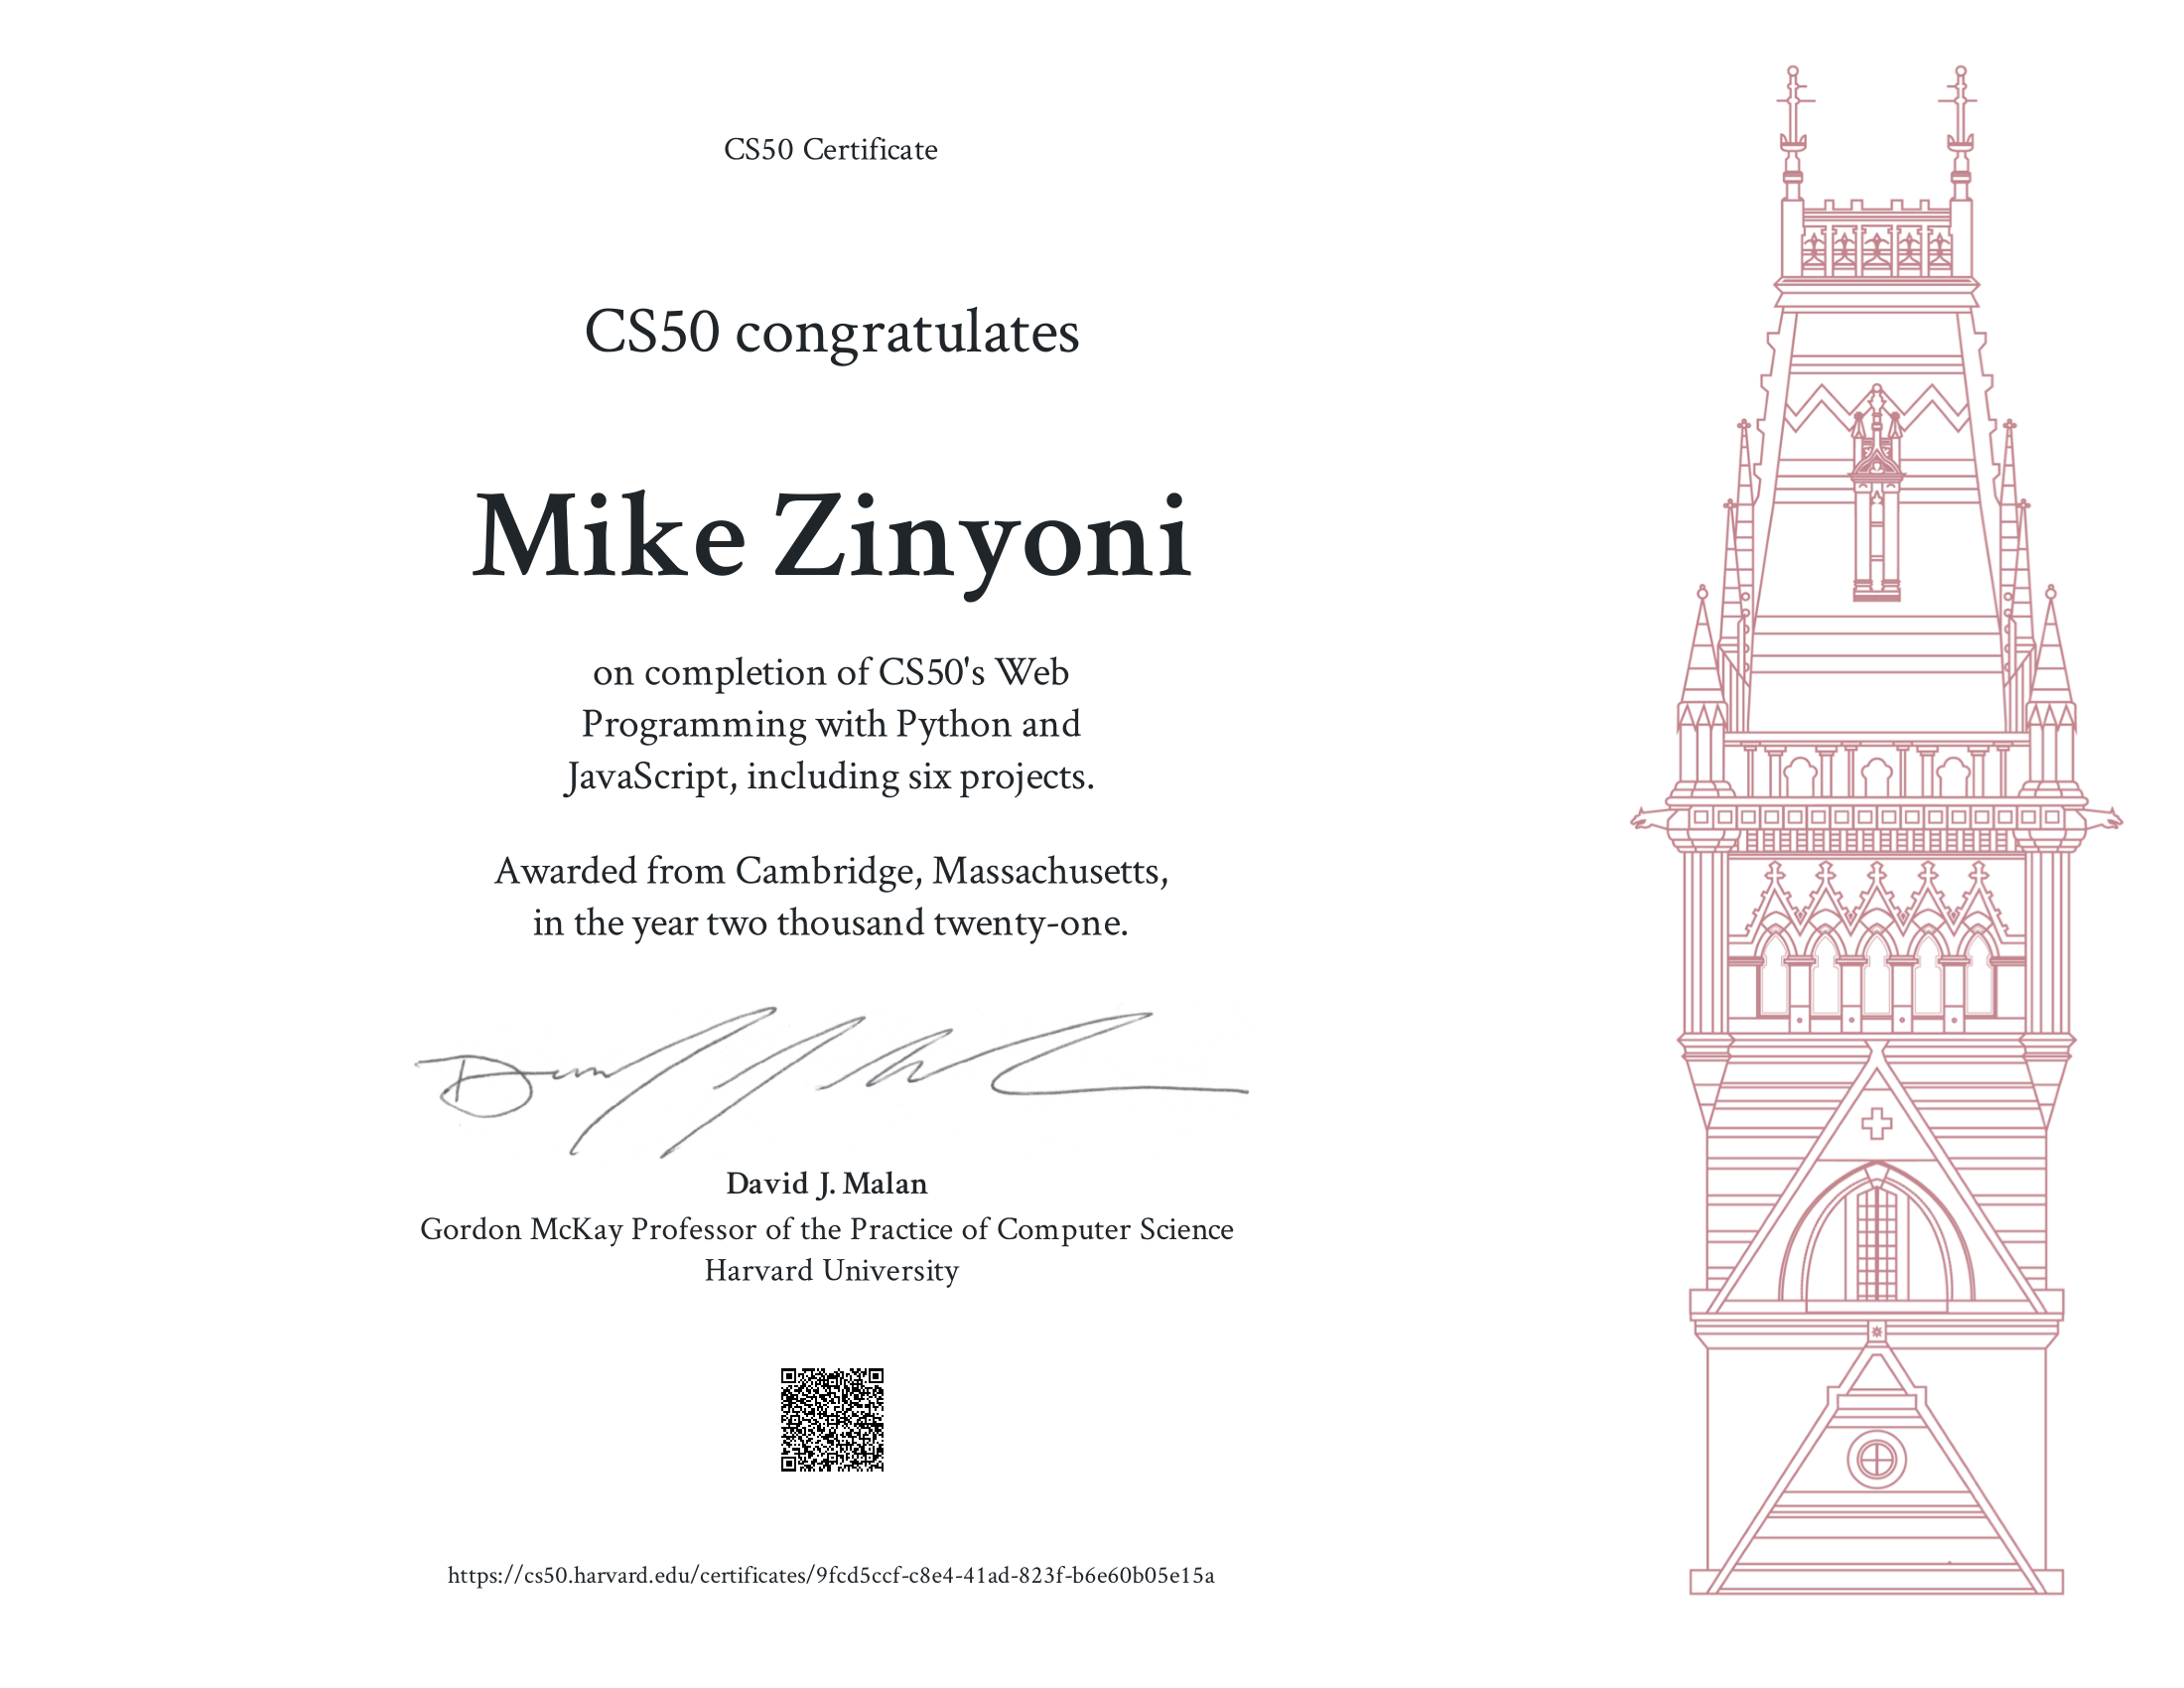 Mike Zinyoni's CS50 Web Programming with Python and JavaScript awarded by Harvard University